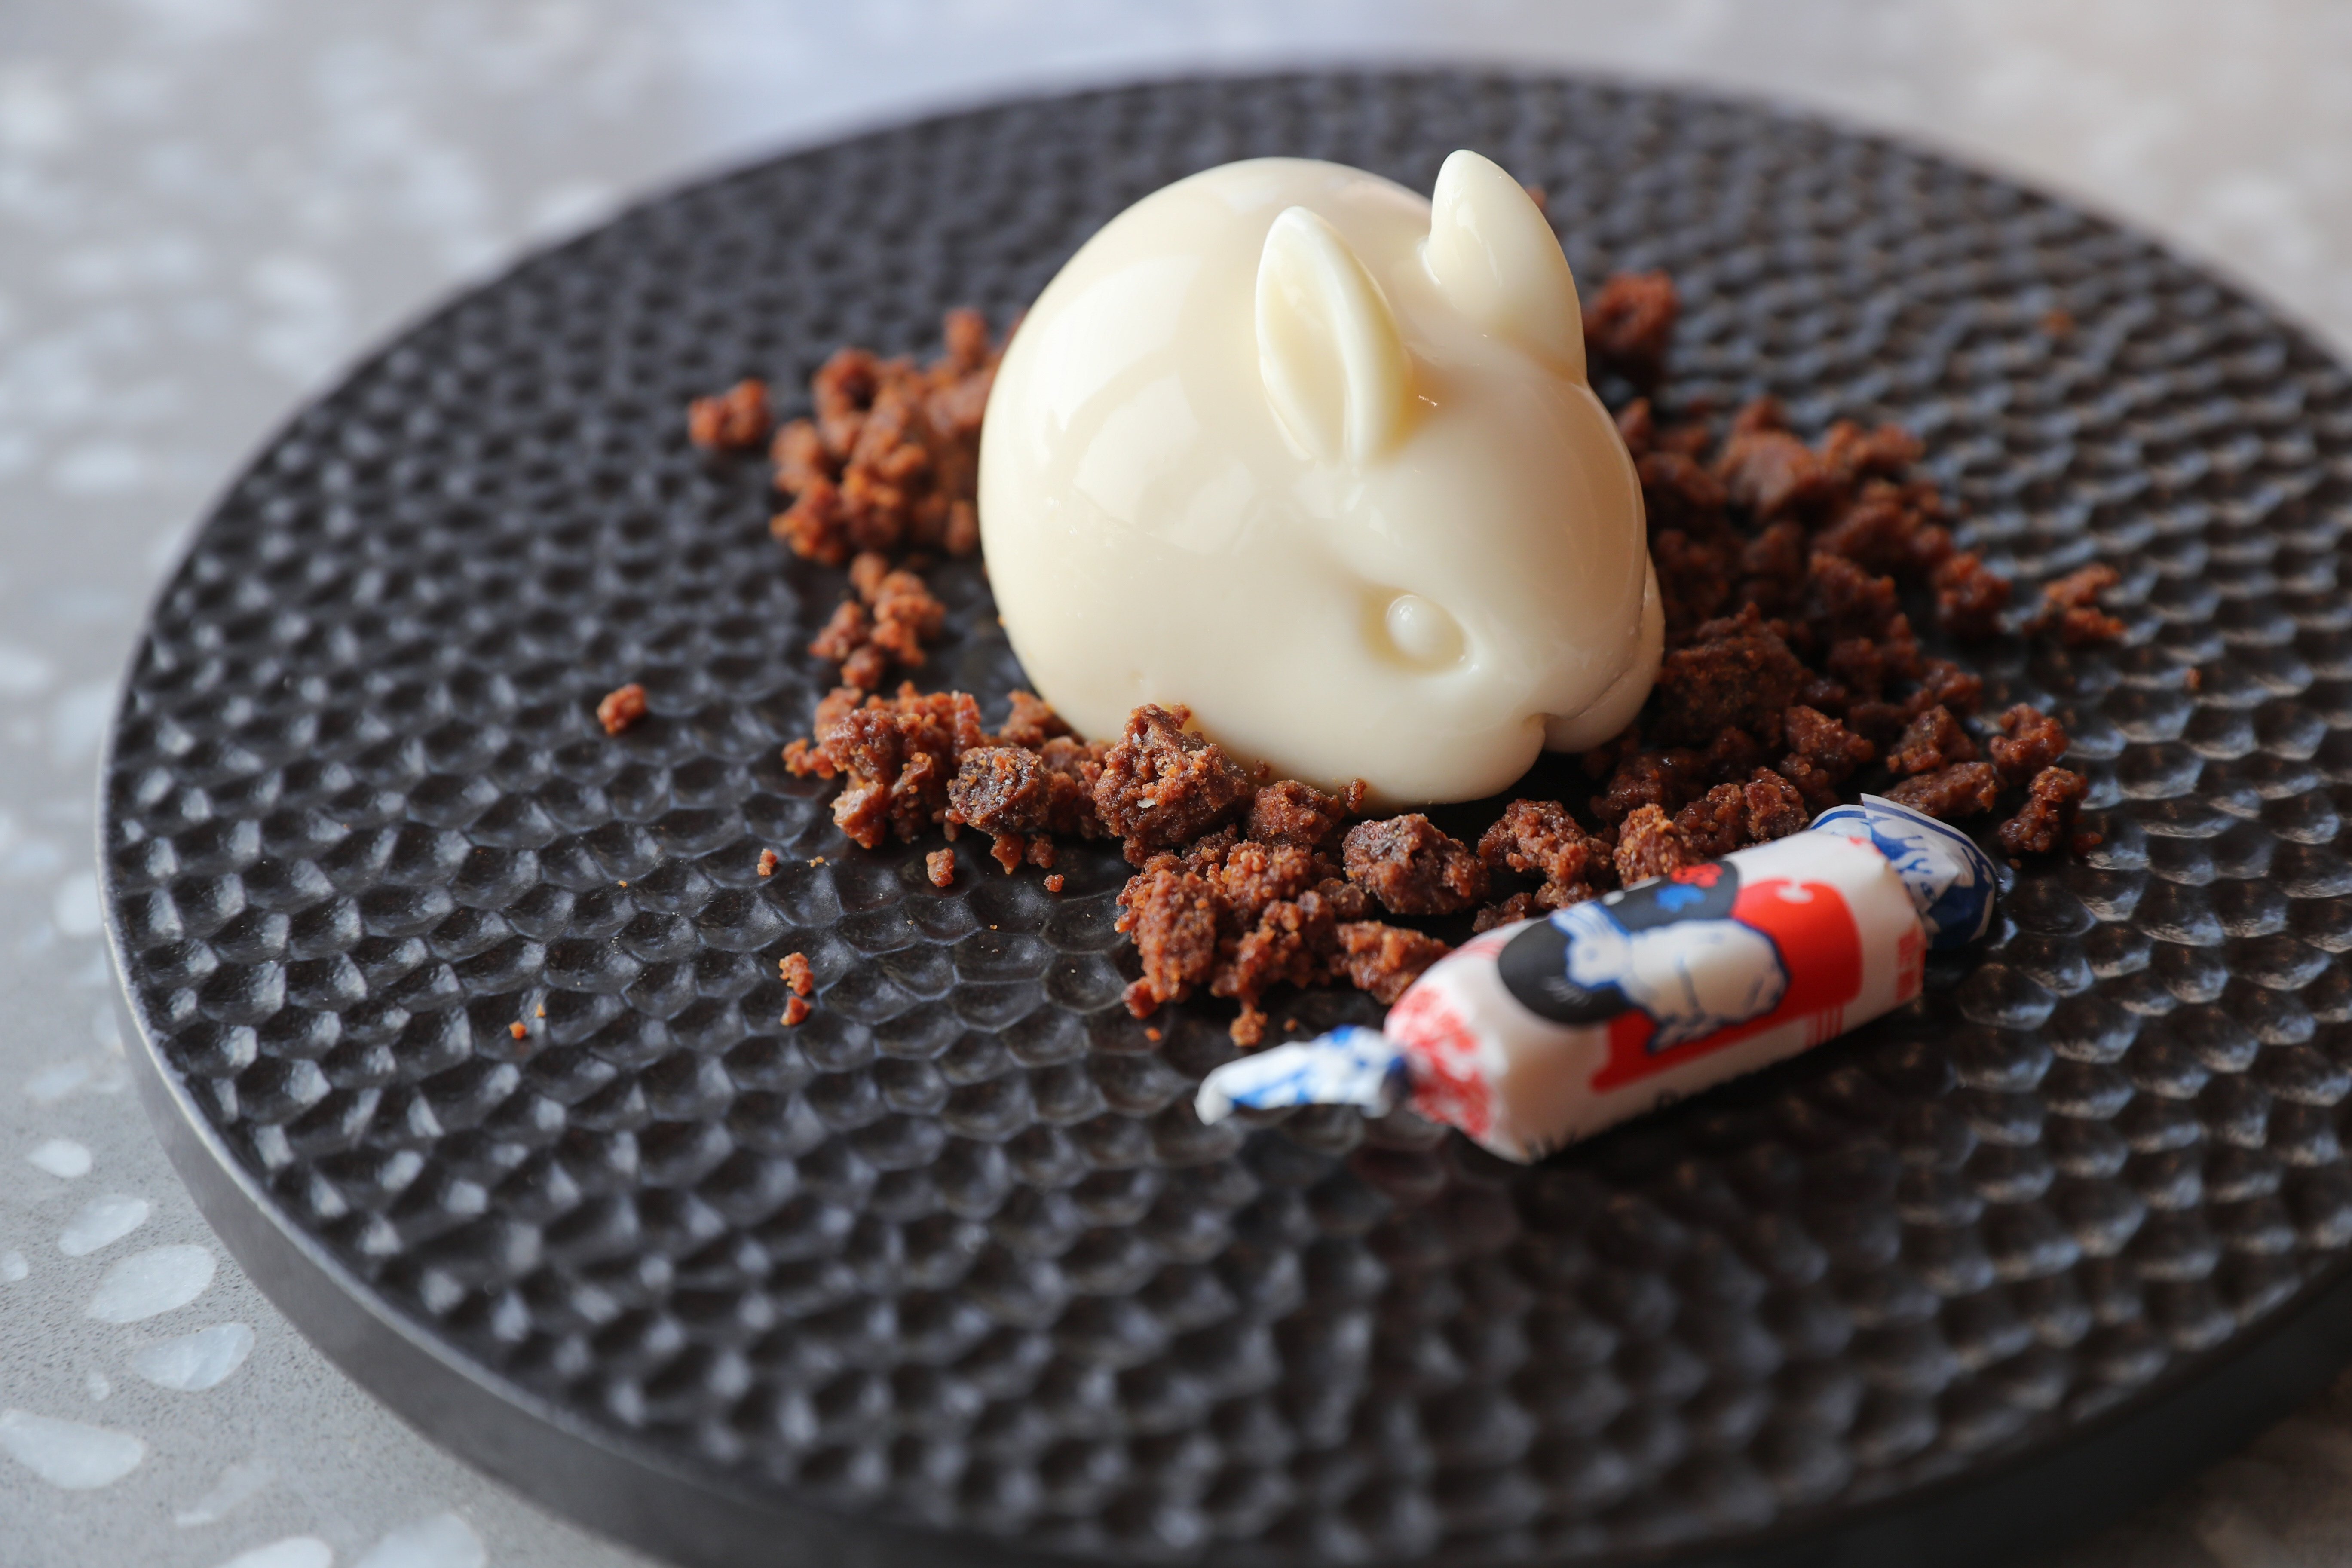 White Rabbit candy custard. Photo: Edmond So